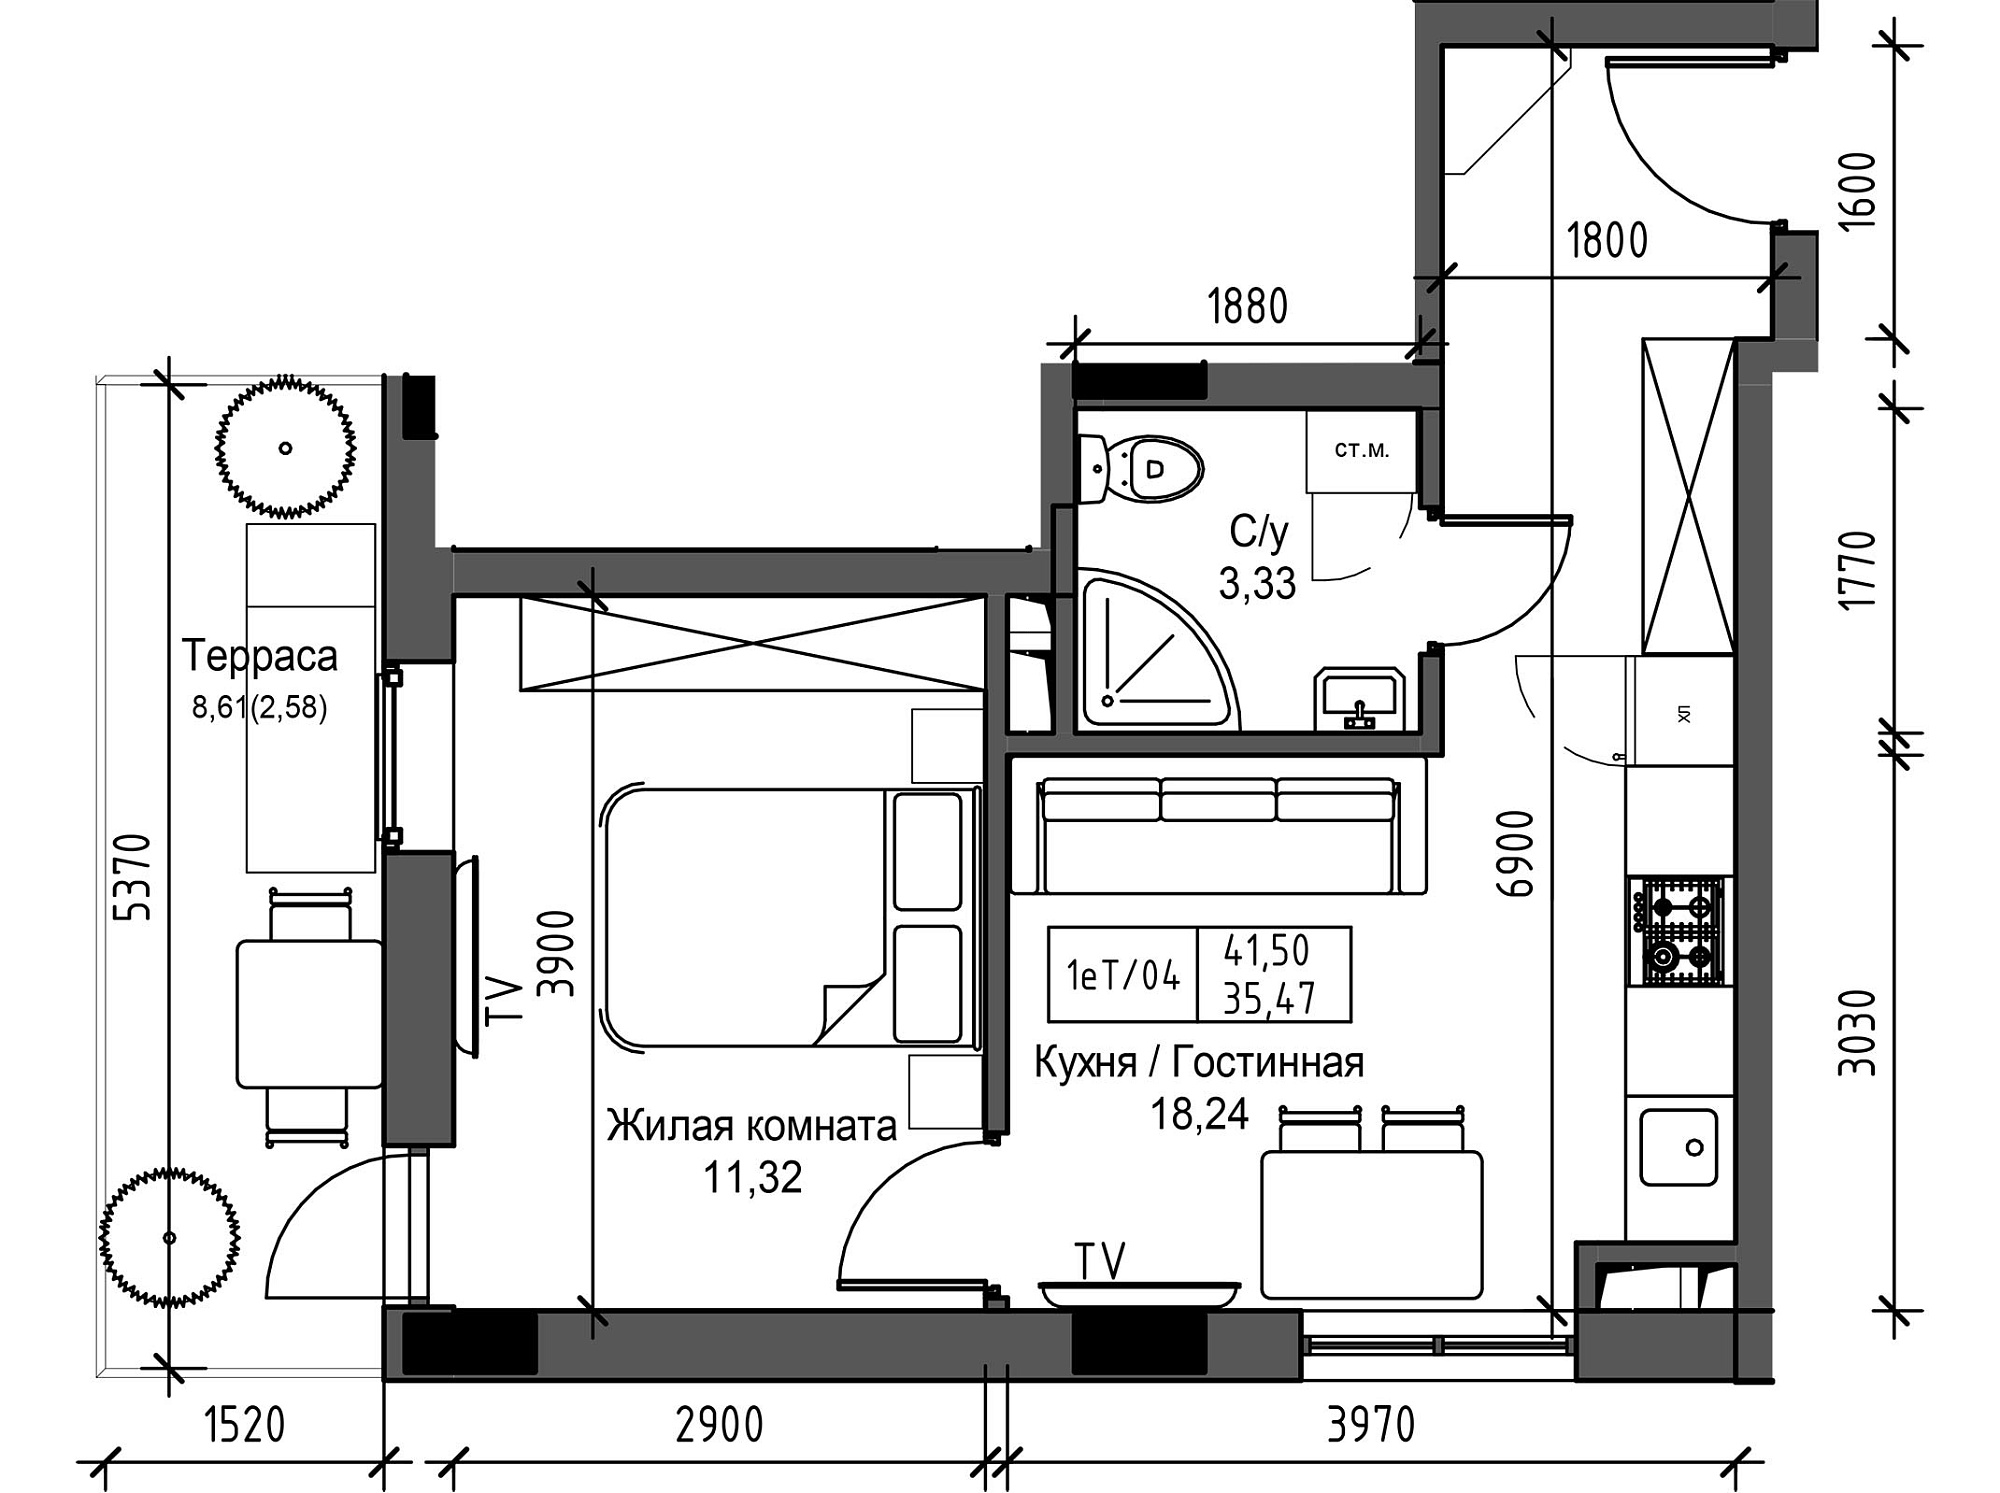 Planning 1-rm flats area 35.47m2, UM-003-07/0073.